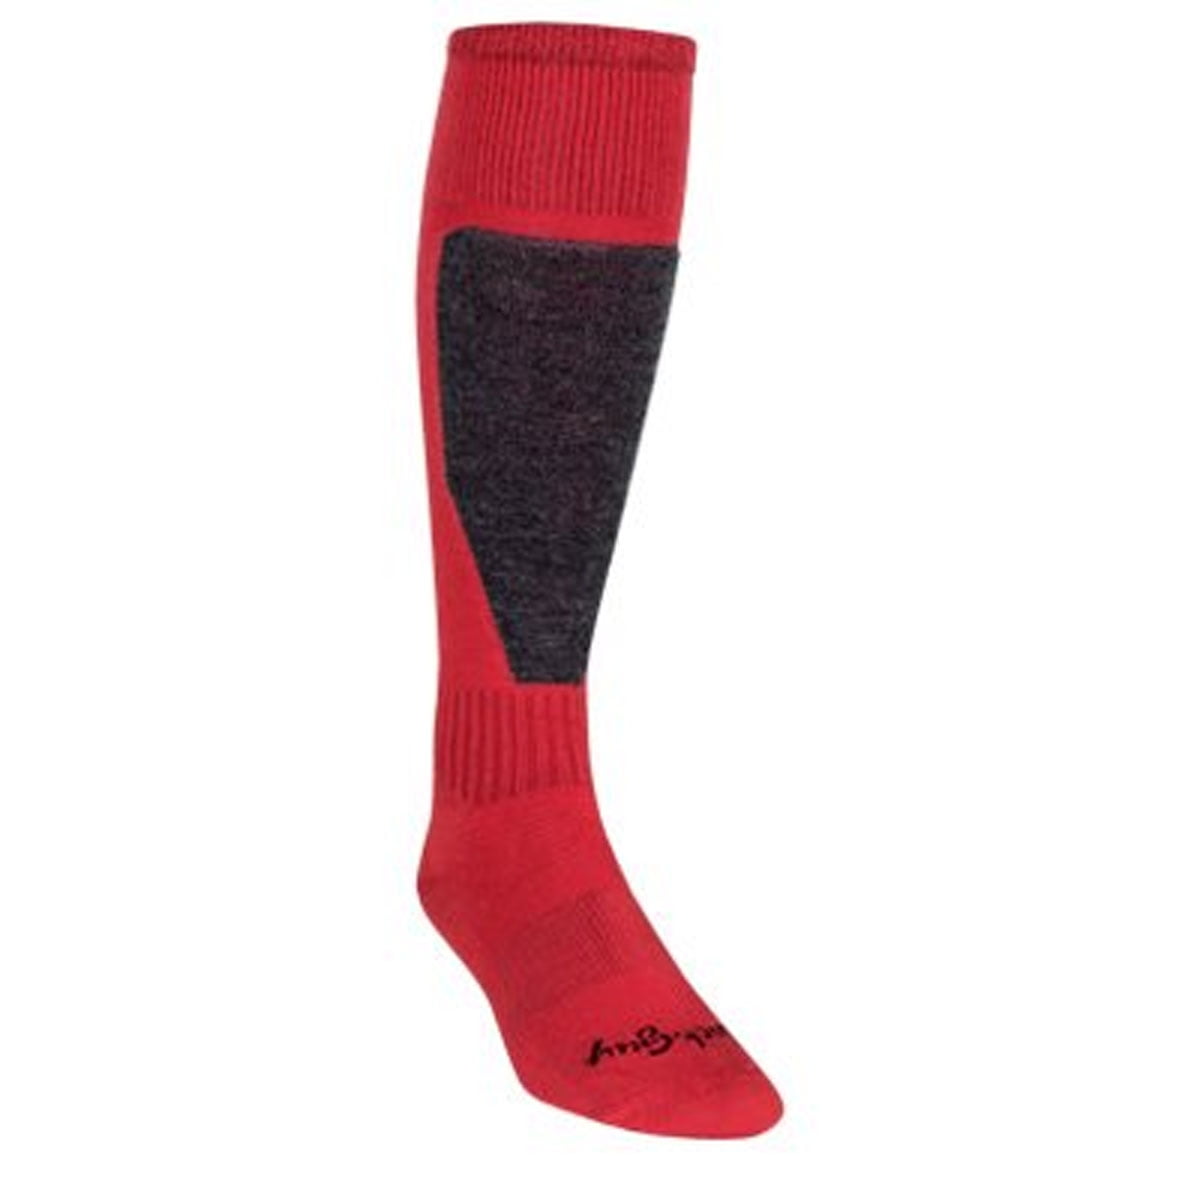 Gray/Black SM/MD SockGuy Wool Pandamonium Sock 